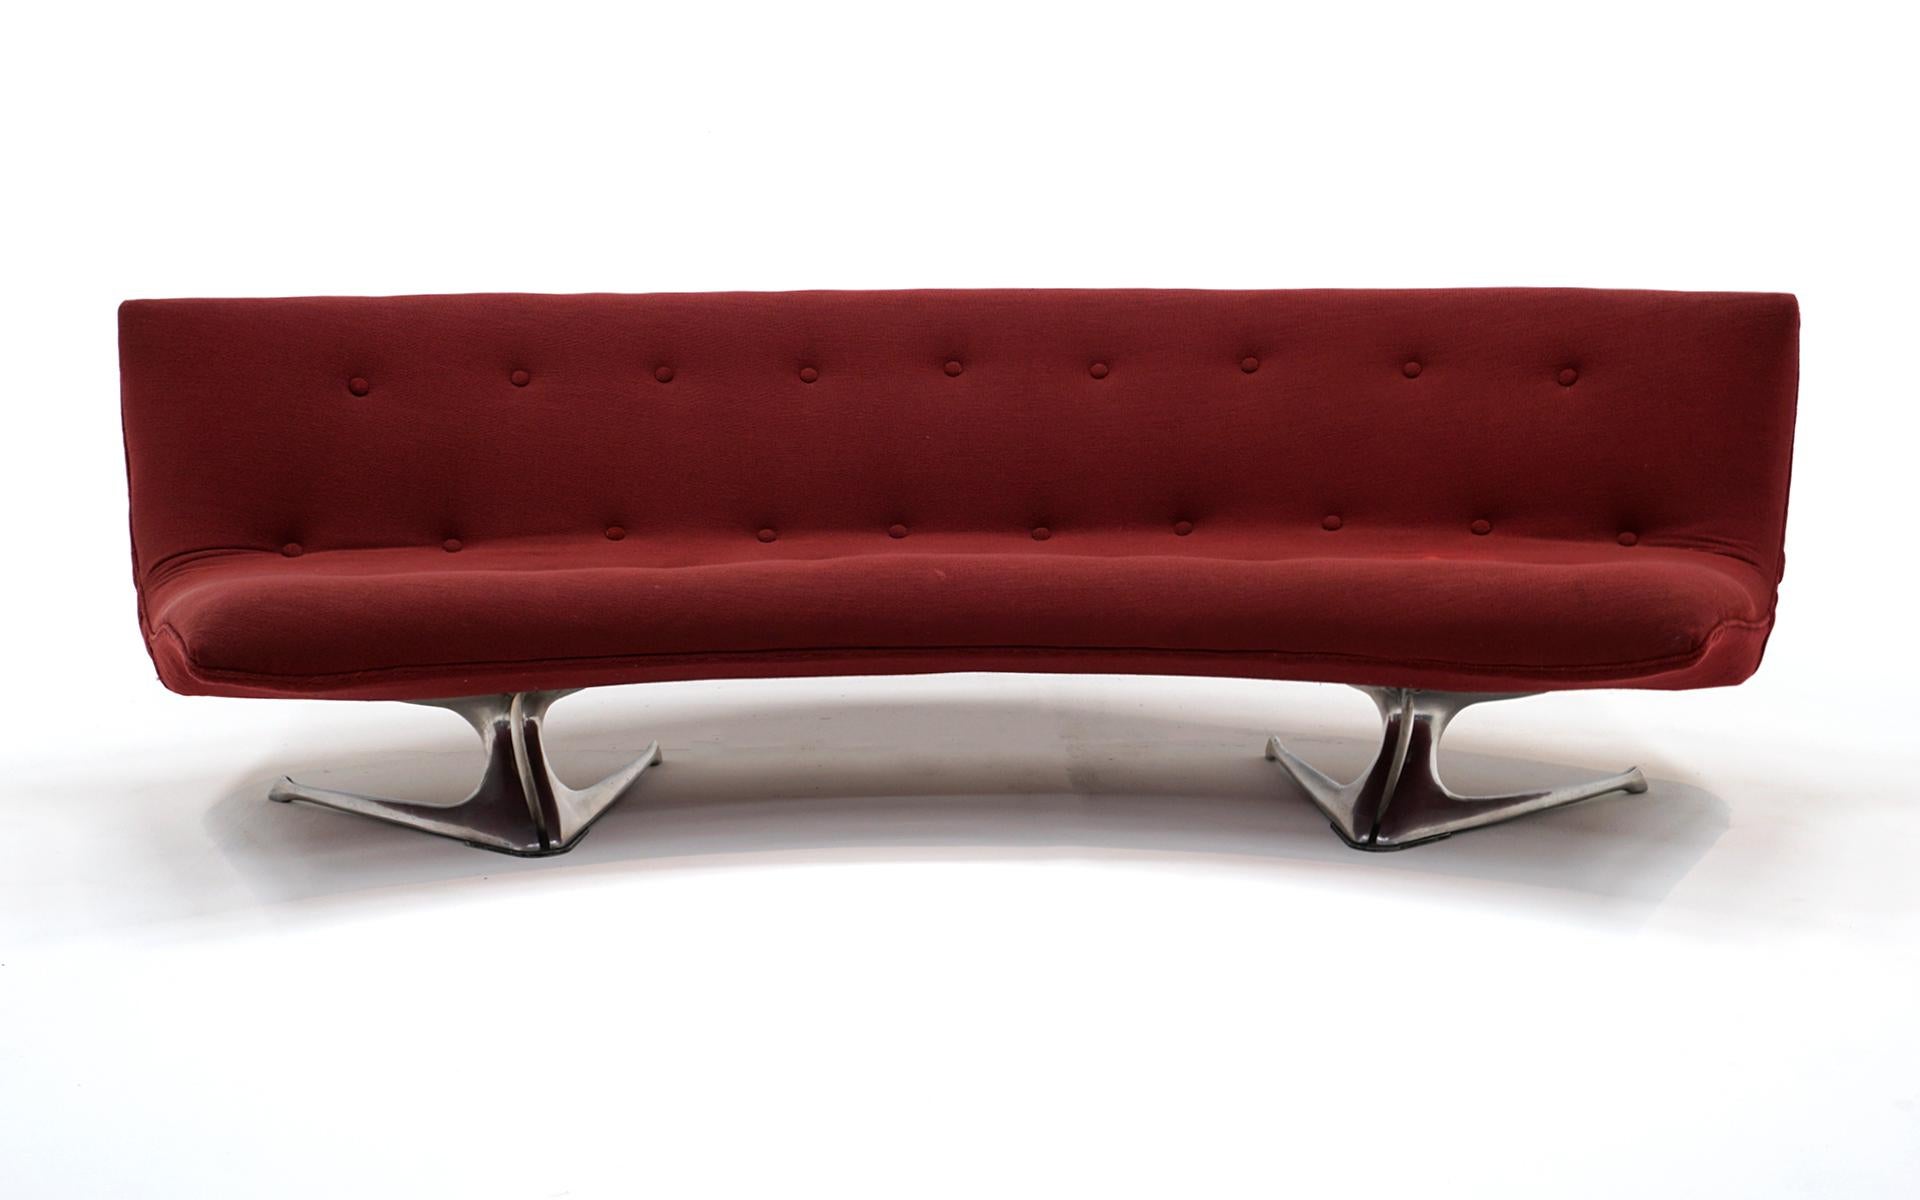 Aluminum Vladimir Kagan Unicorn sofa for Kagan Designs, 1967.  Very Rare.  One Owner.  For Sale